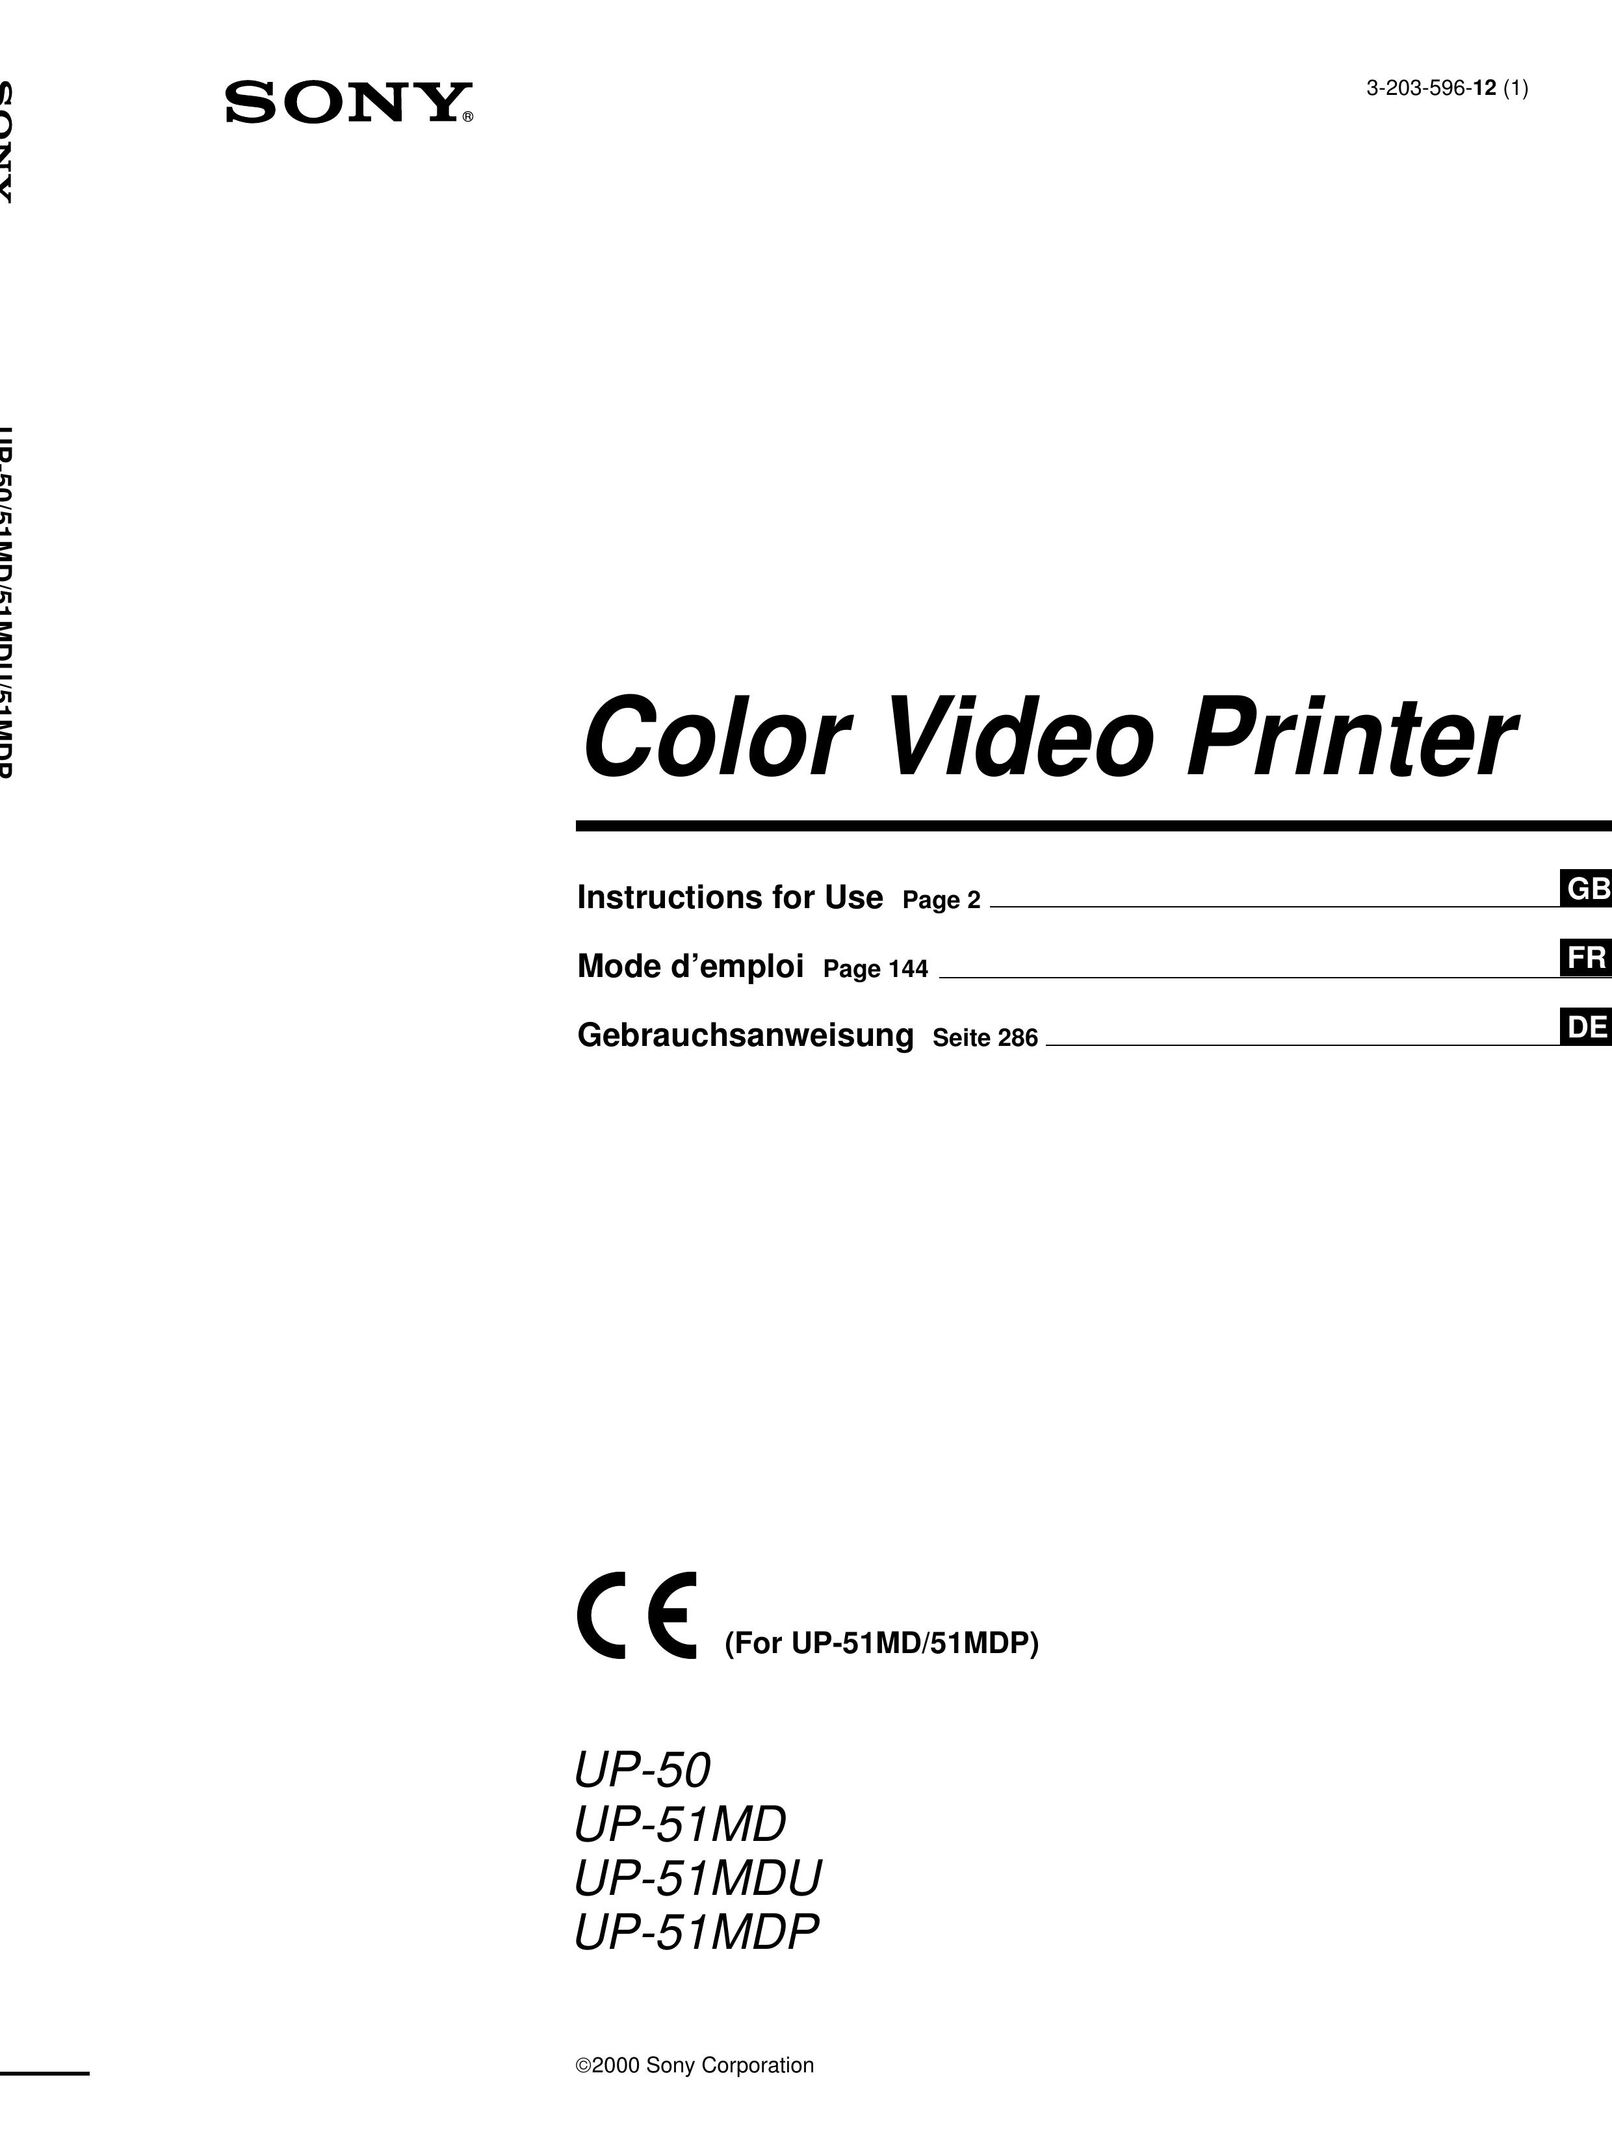 Sony UP-51MDU Printer User Manual